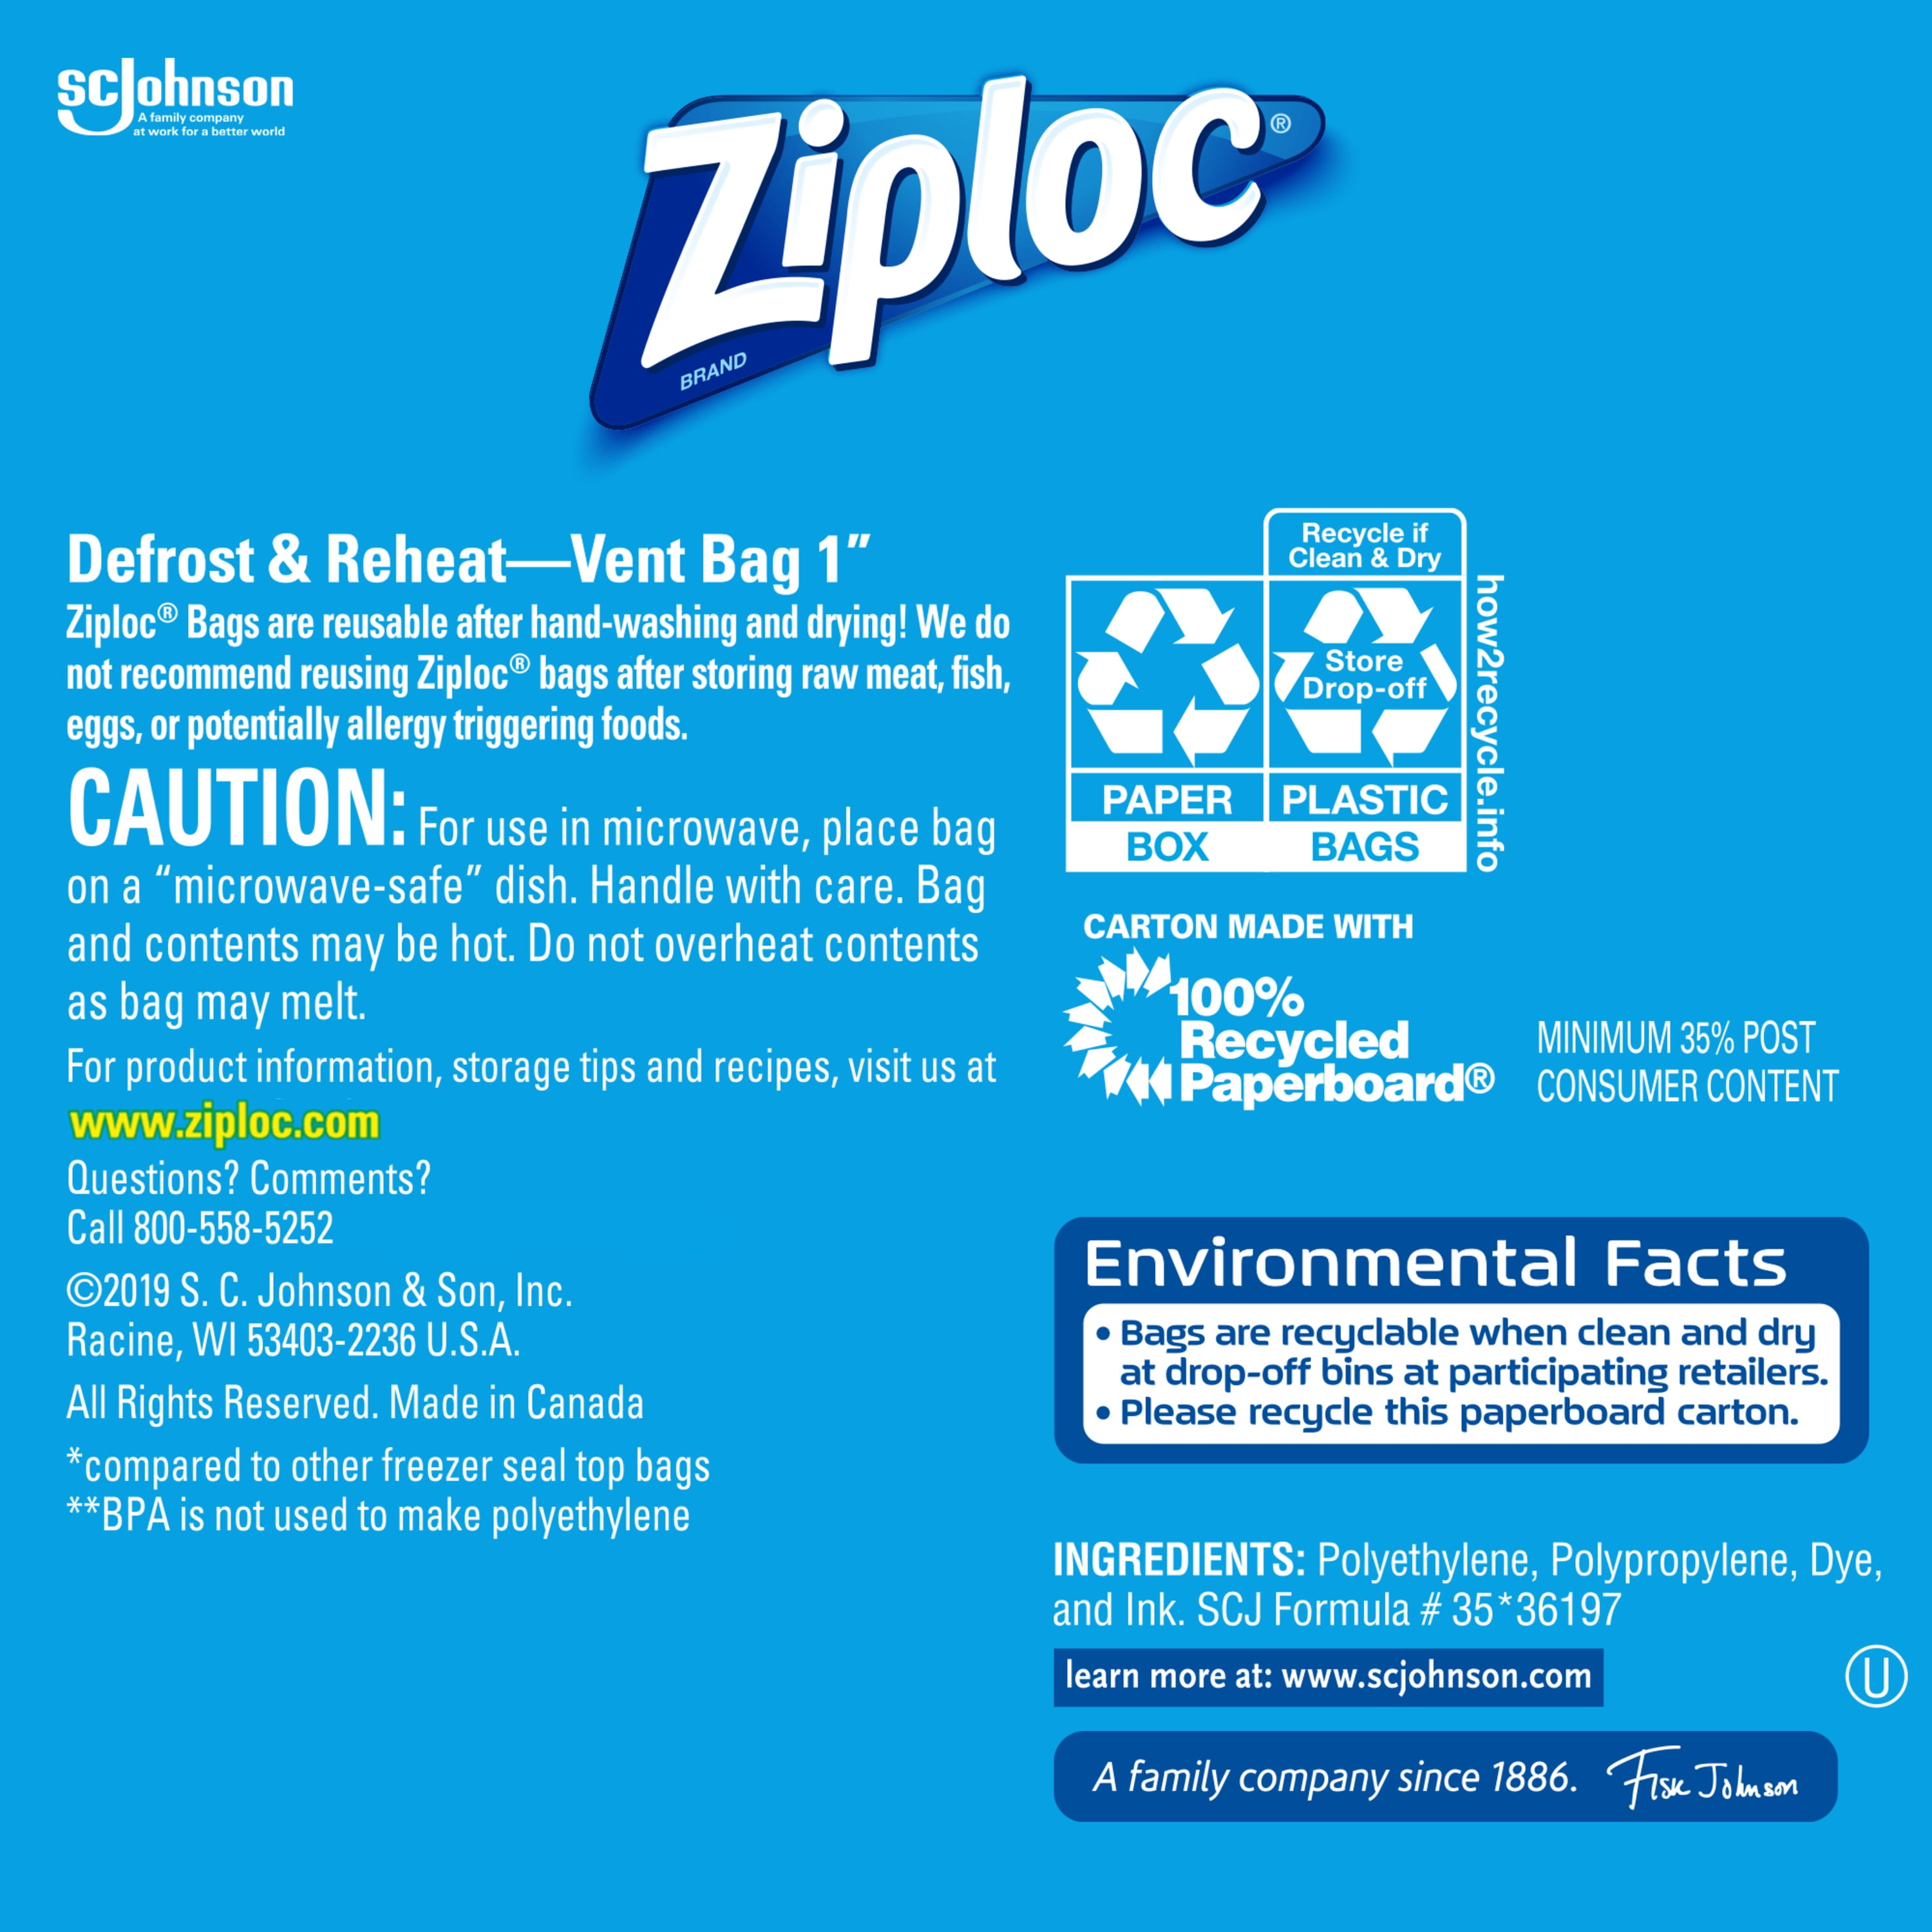 Ziploc 1 Qt. Double Zipper Freezer Bag (19-Count)